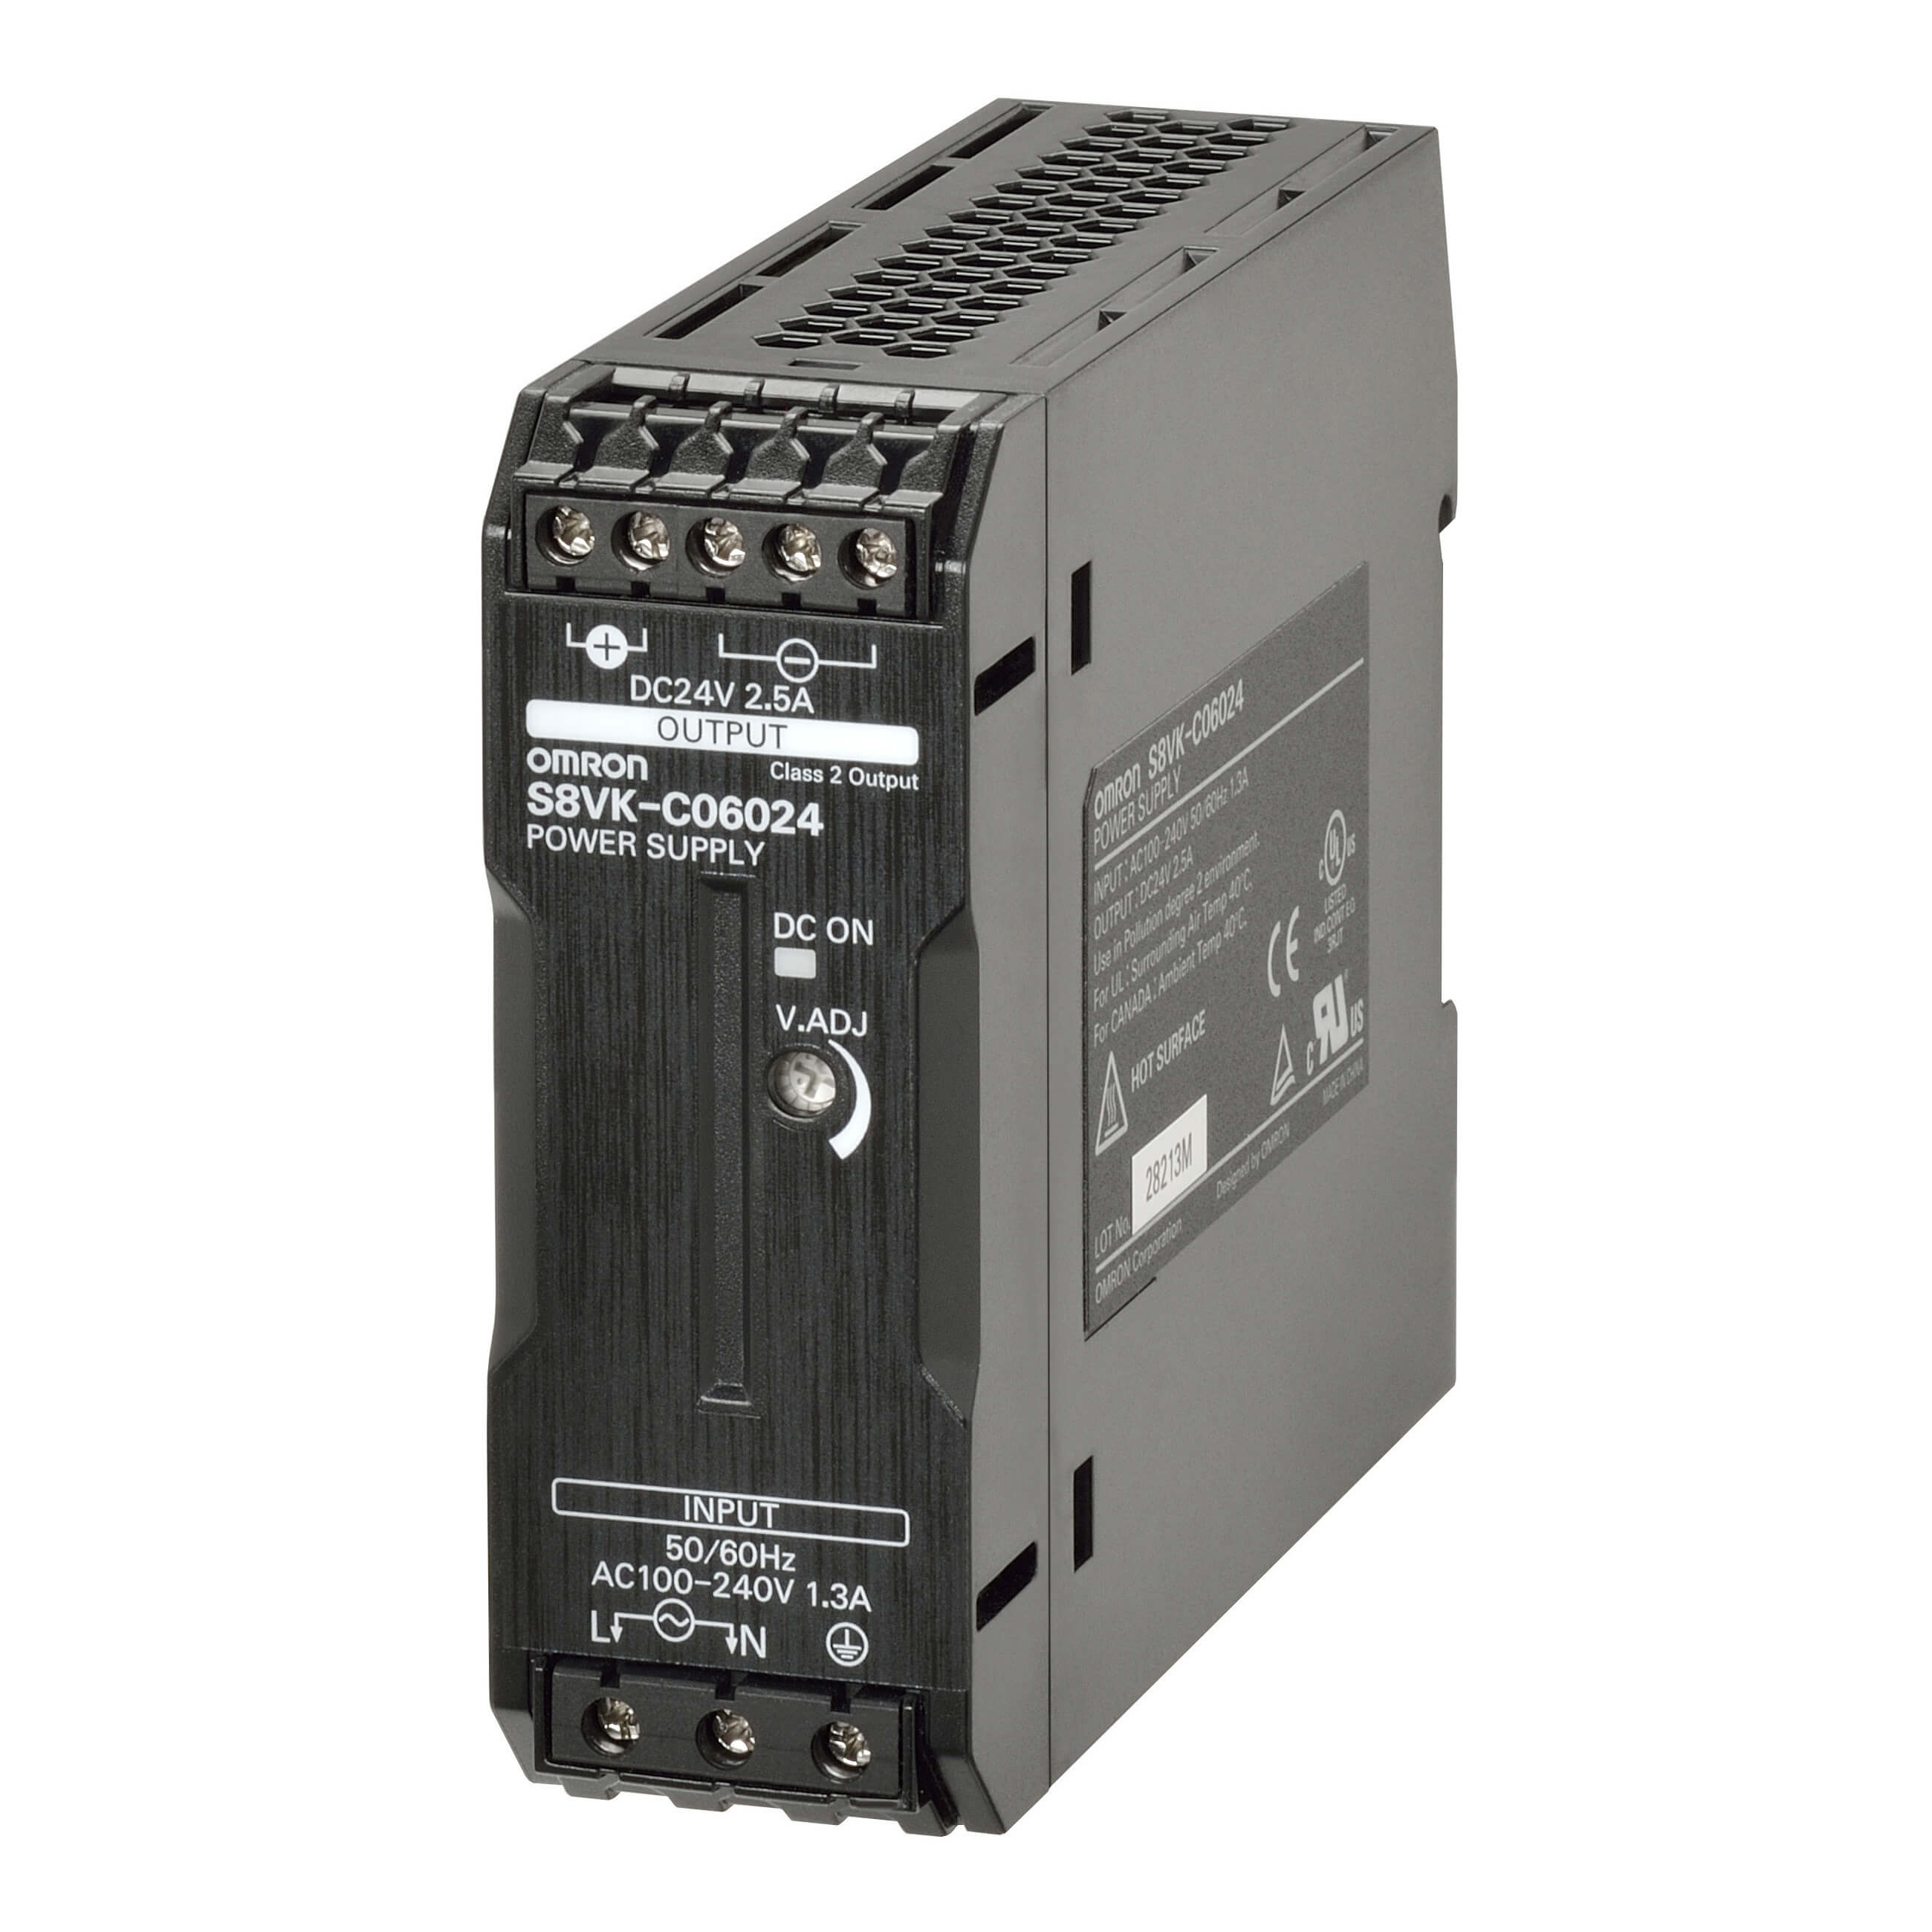 S8VK-C06024 Power Supply Switch Mode 24VDC 60W 2.5A